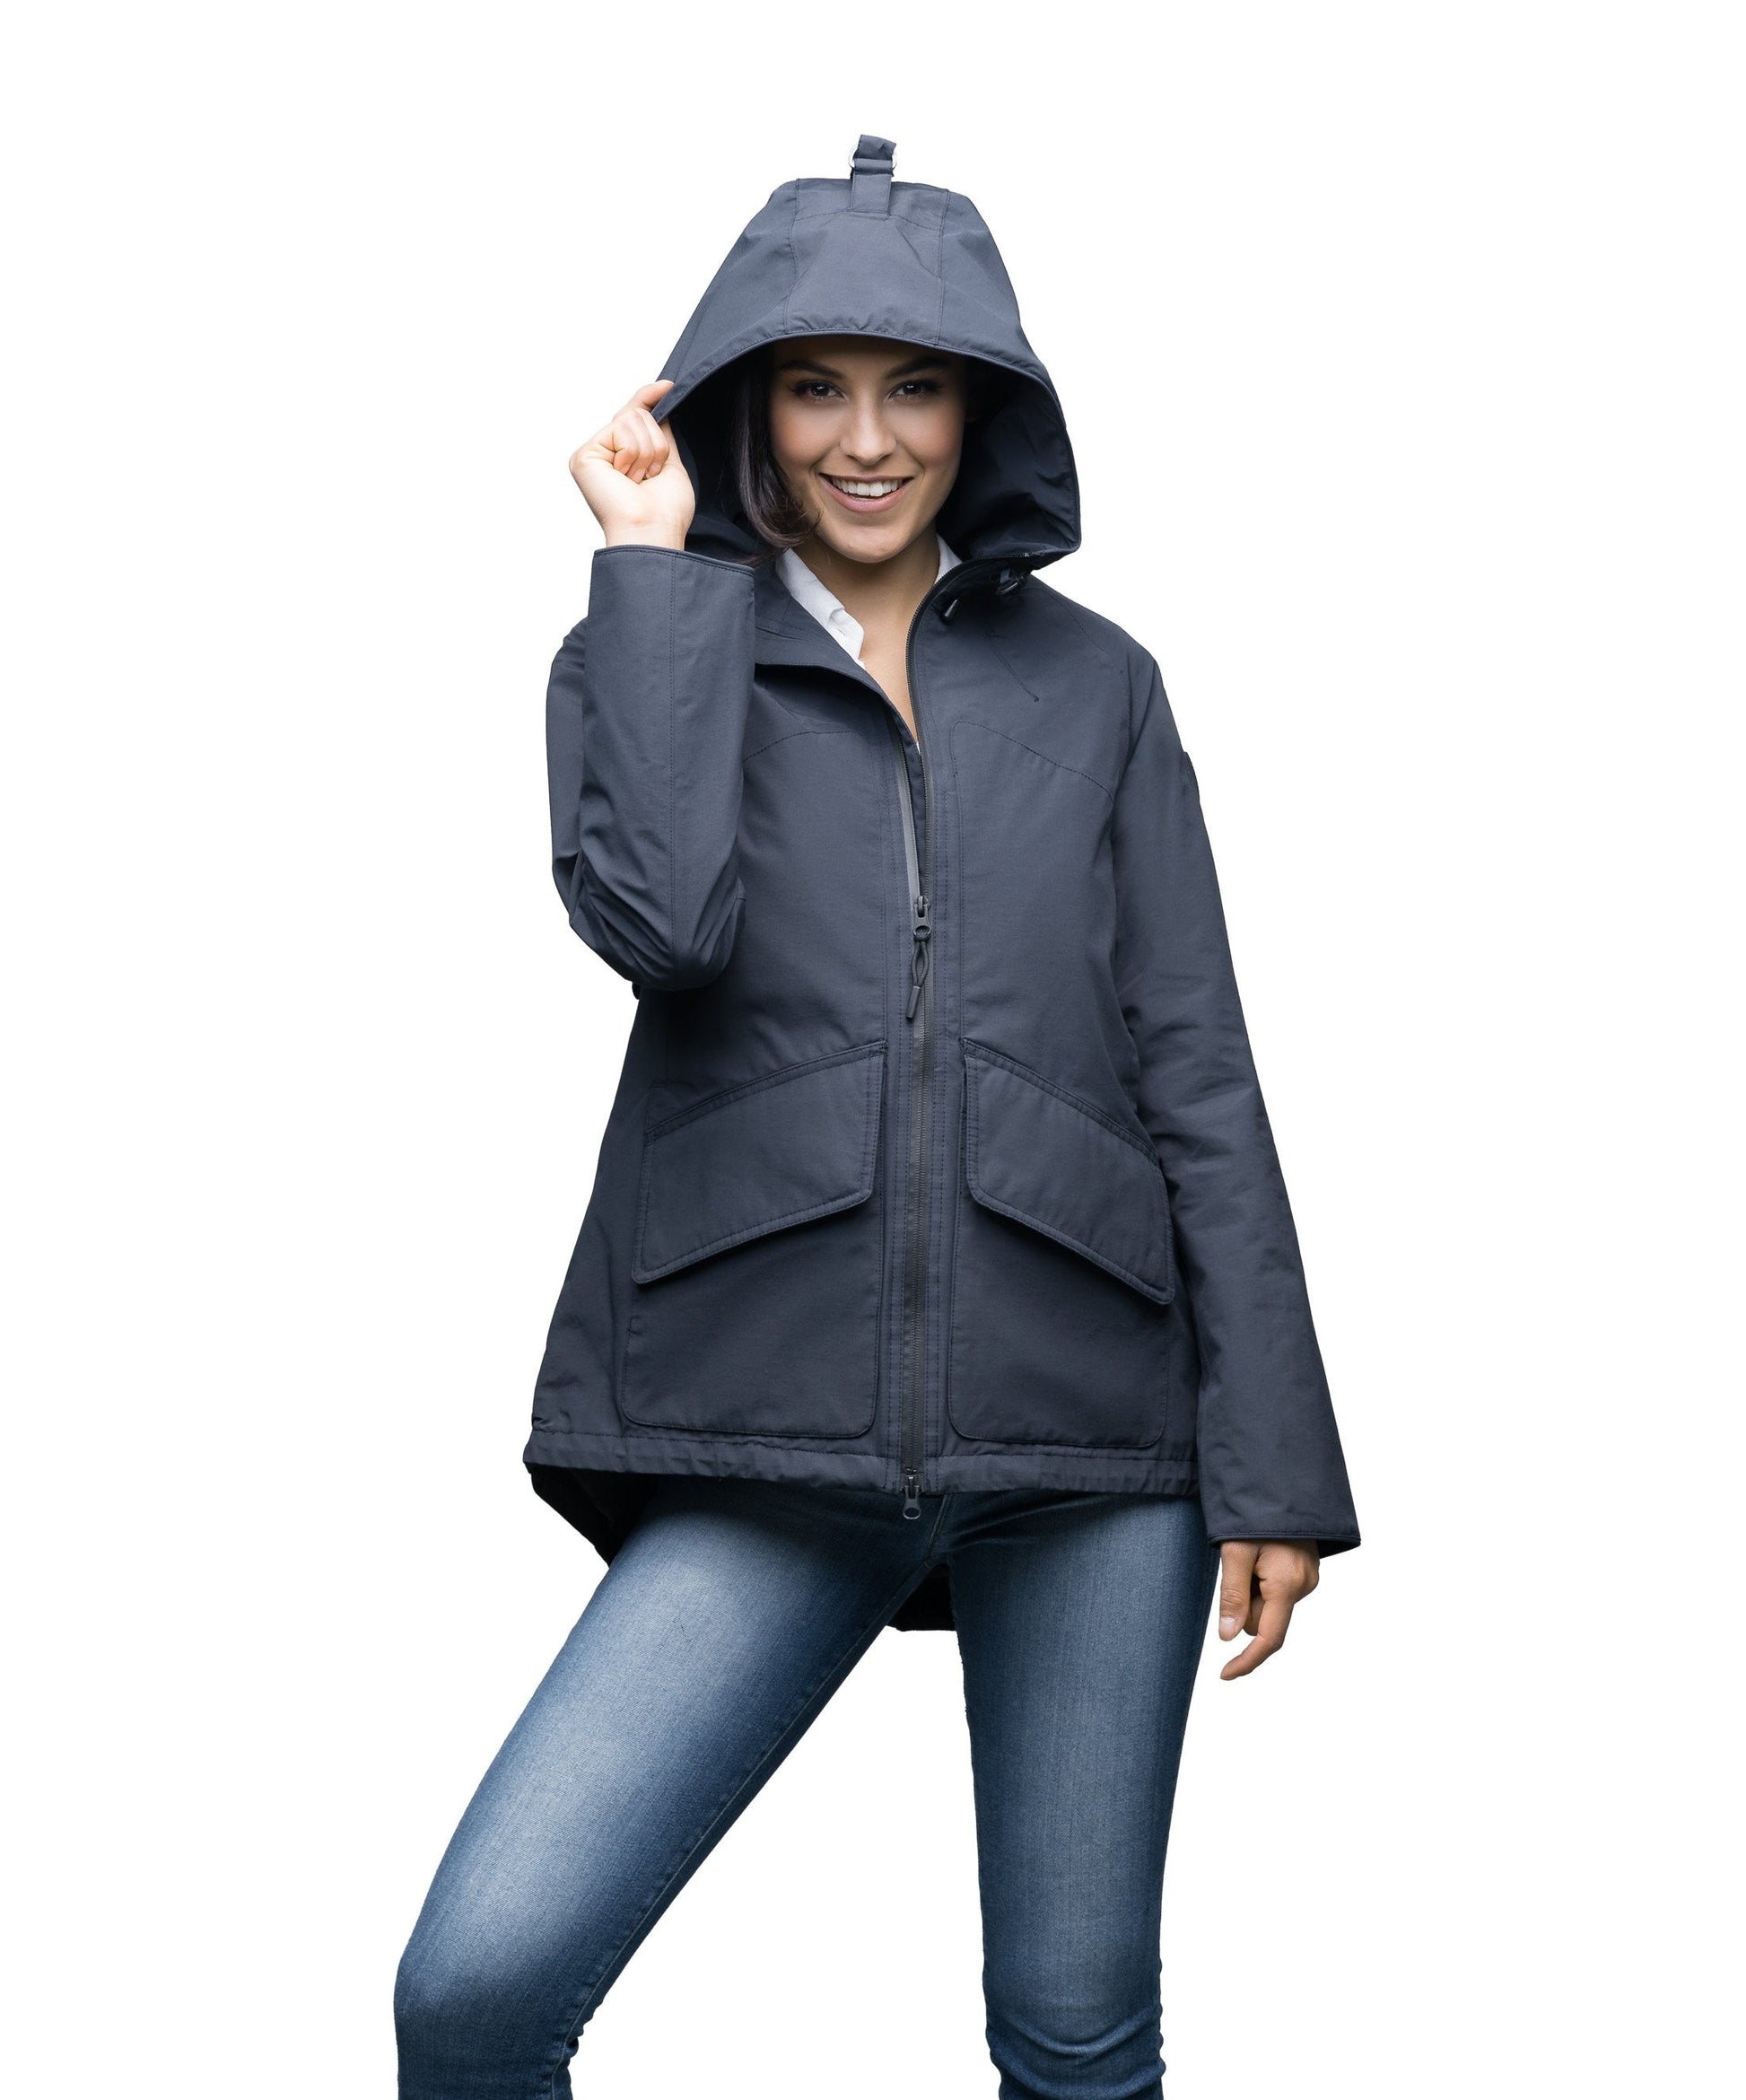 Women's hooded rain jacket with high low hem in Navy